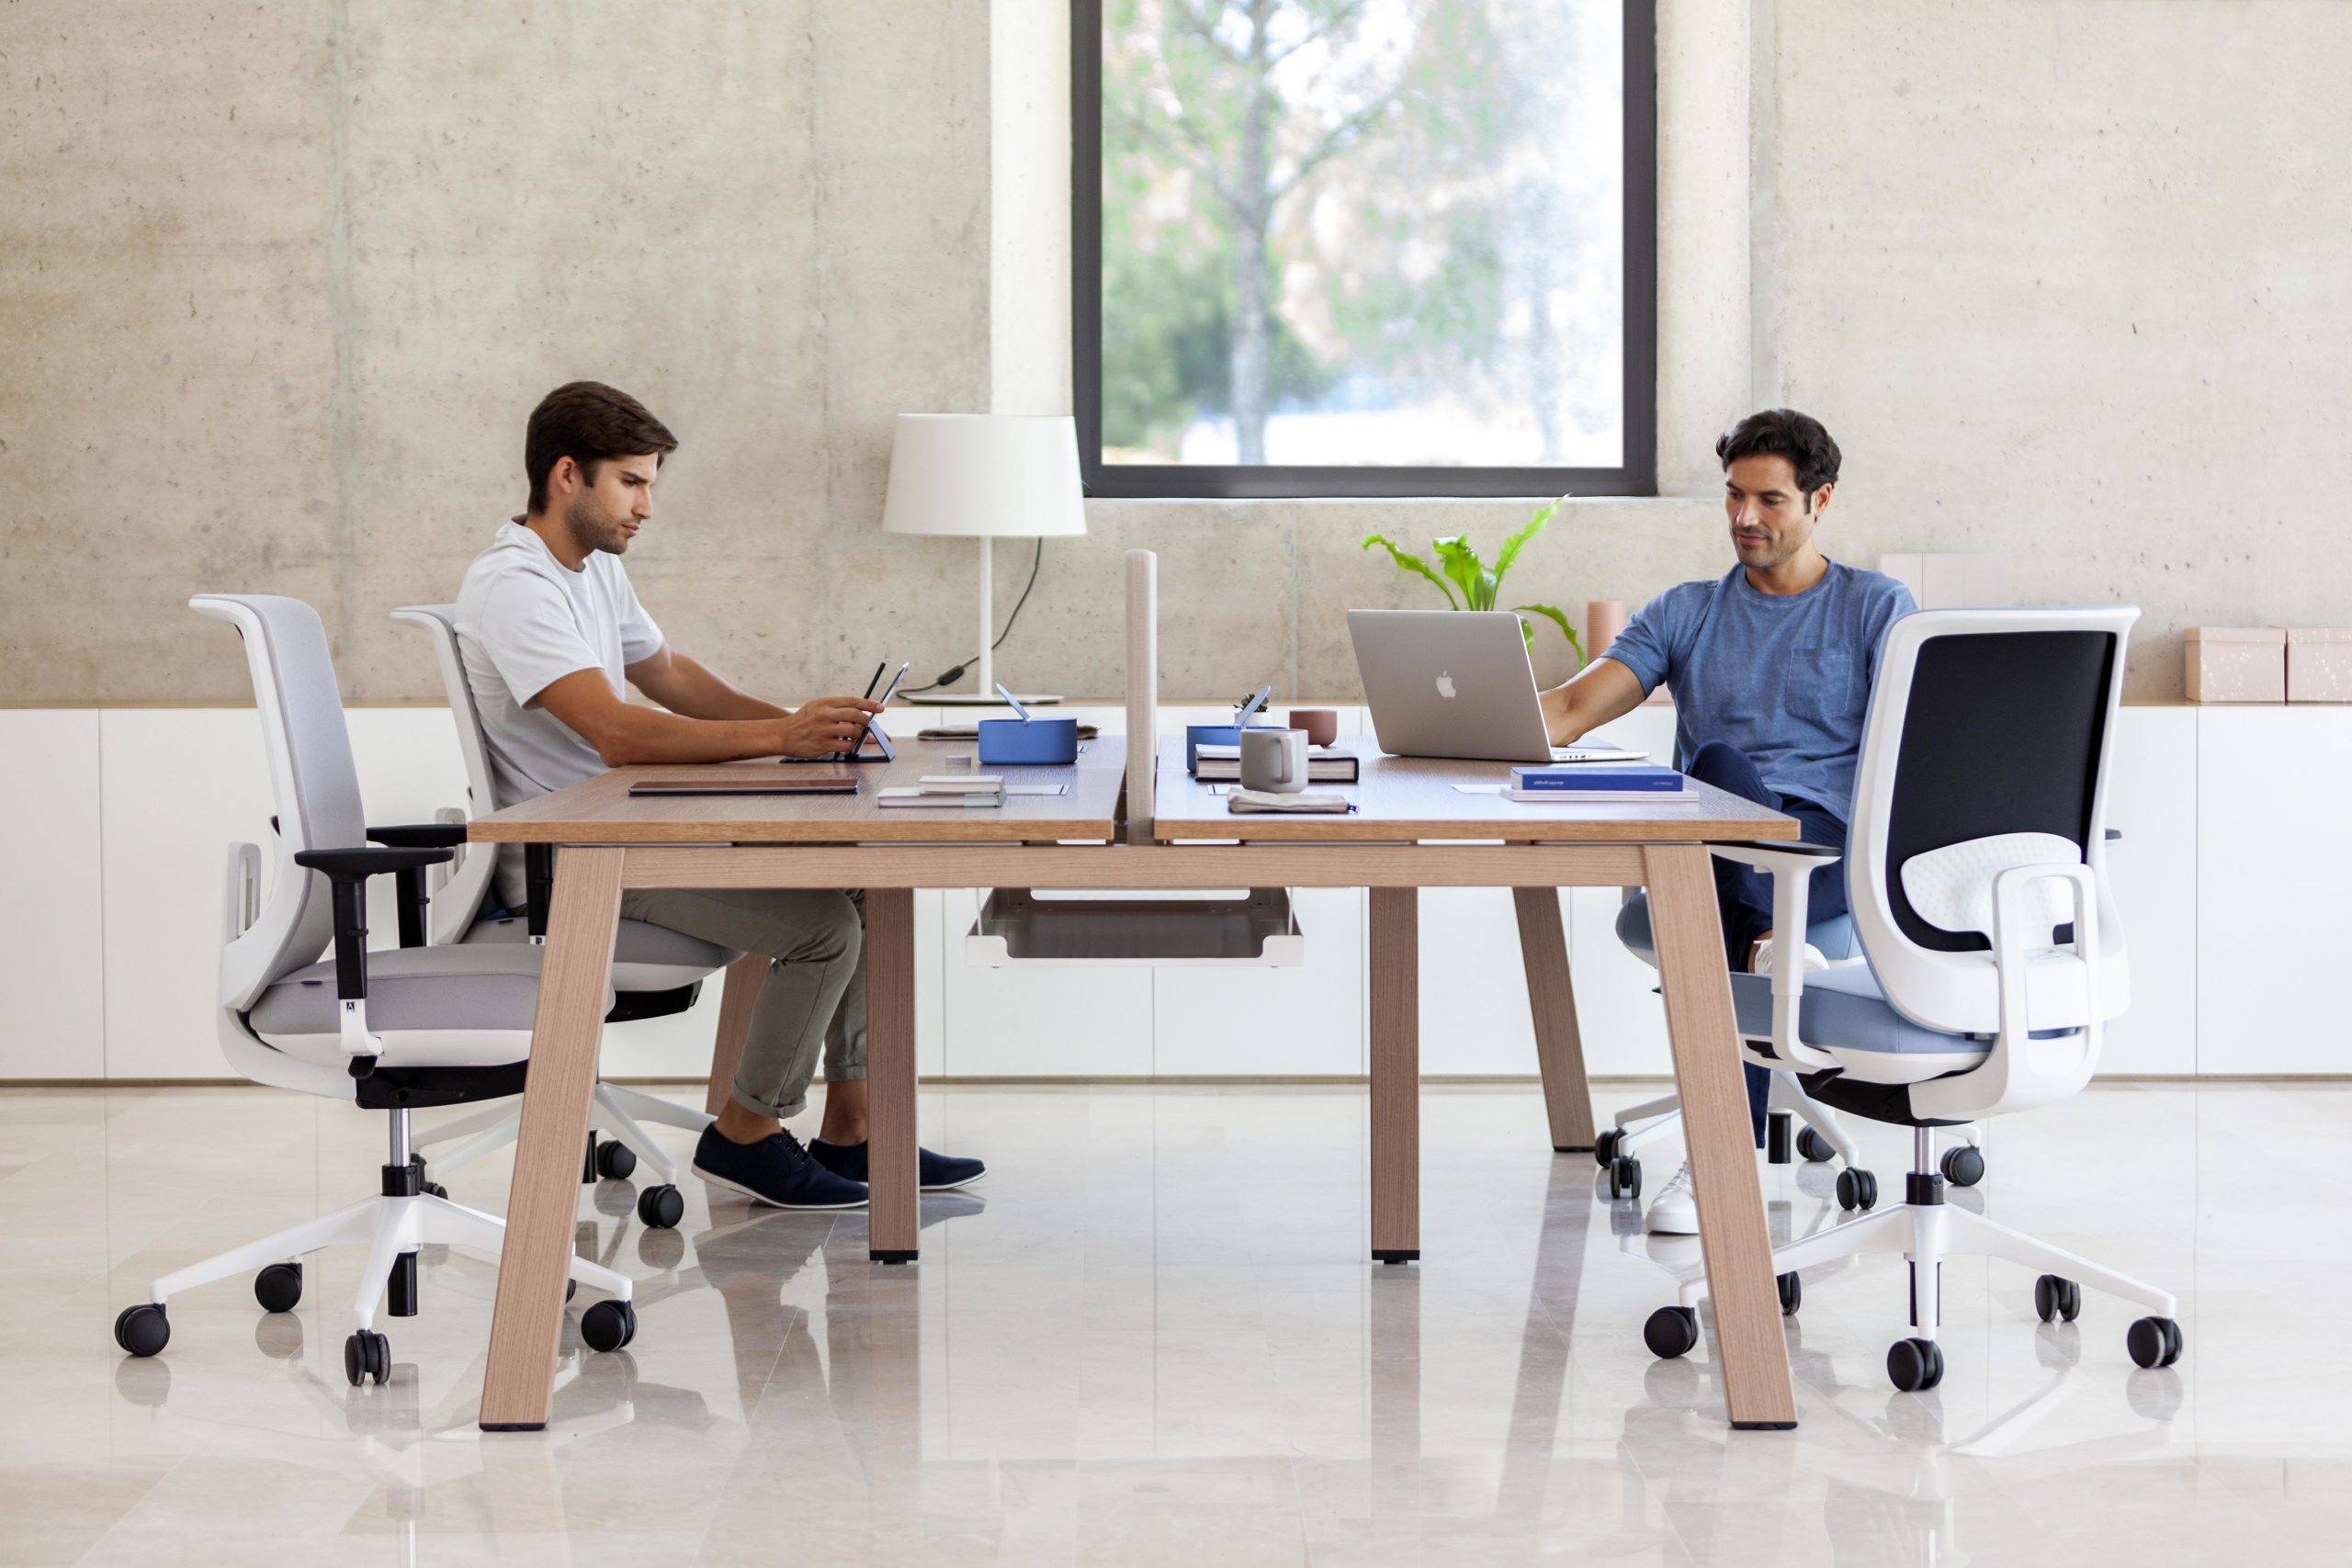 Silla de oficina Actiu Trim sillería mobiliario de oficina en Valencia Impacto Diseño